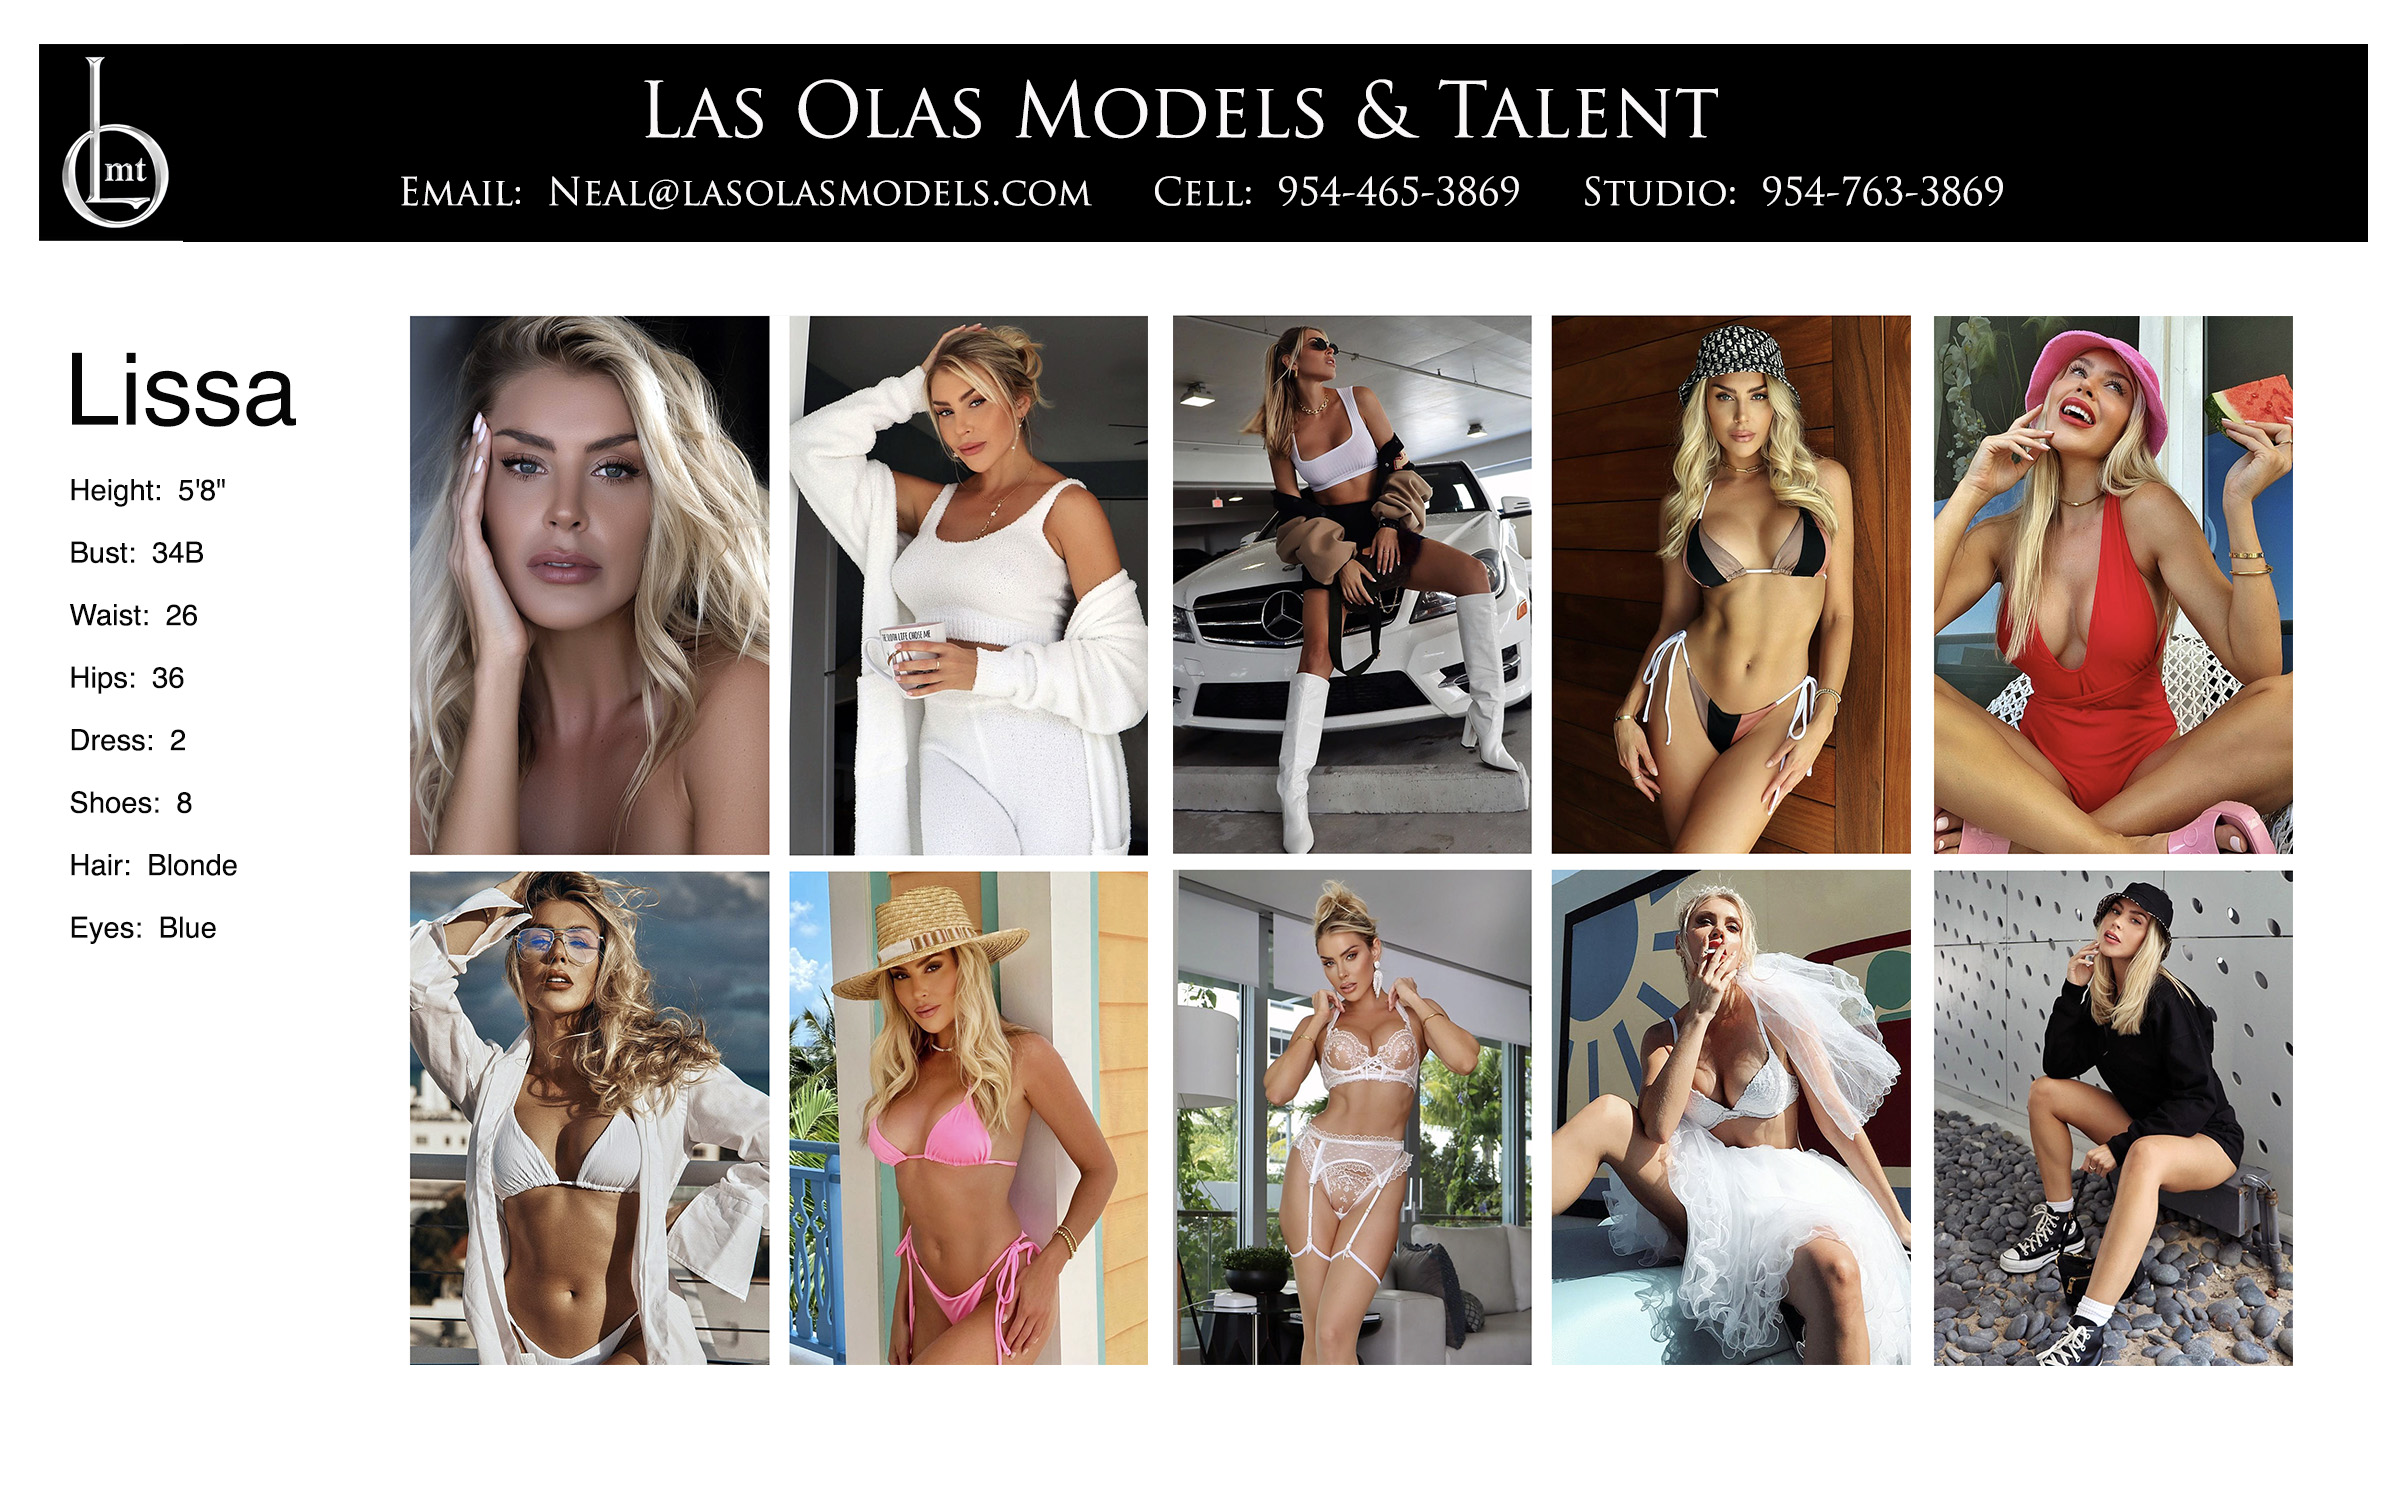 Models Fort Lauderdale Miami South Florida - Print Video Commercial Catalog - Las Olas Models & Talent- Lissa Comp